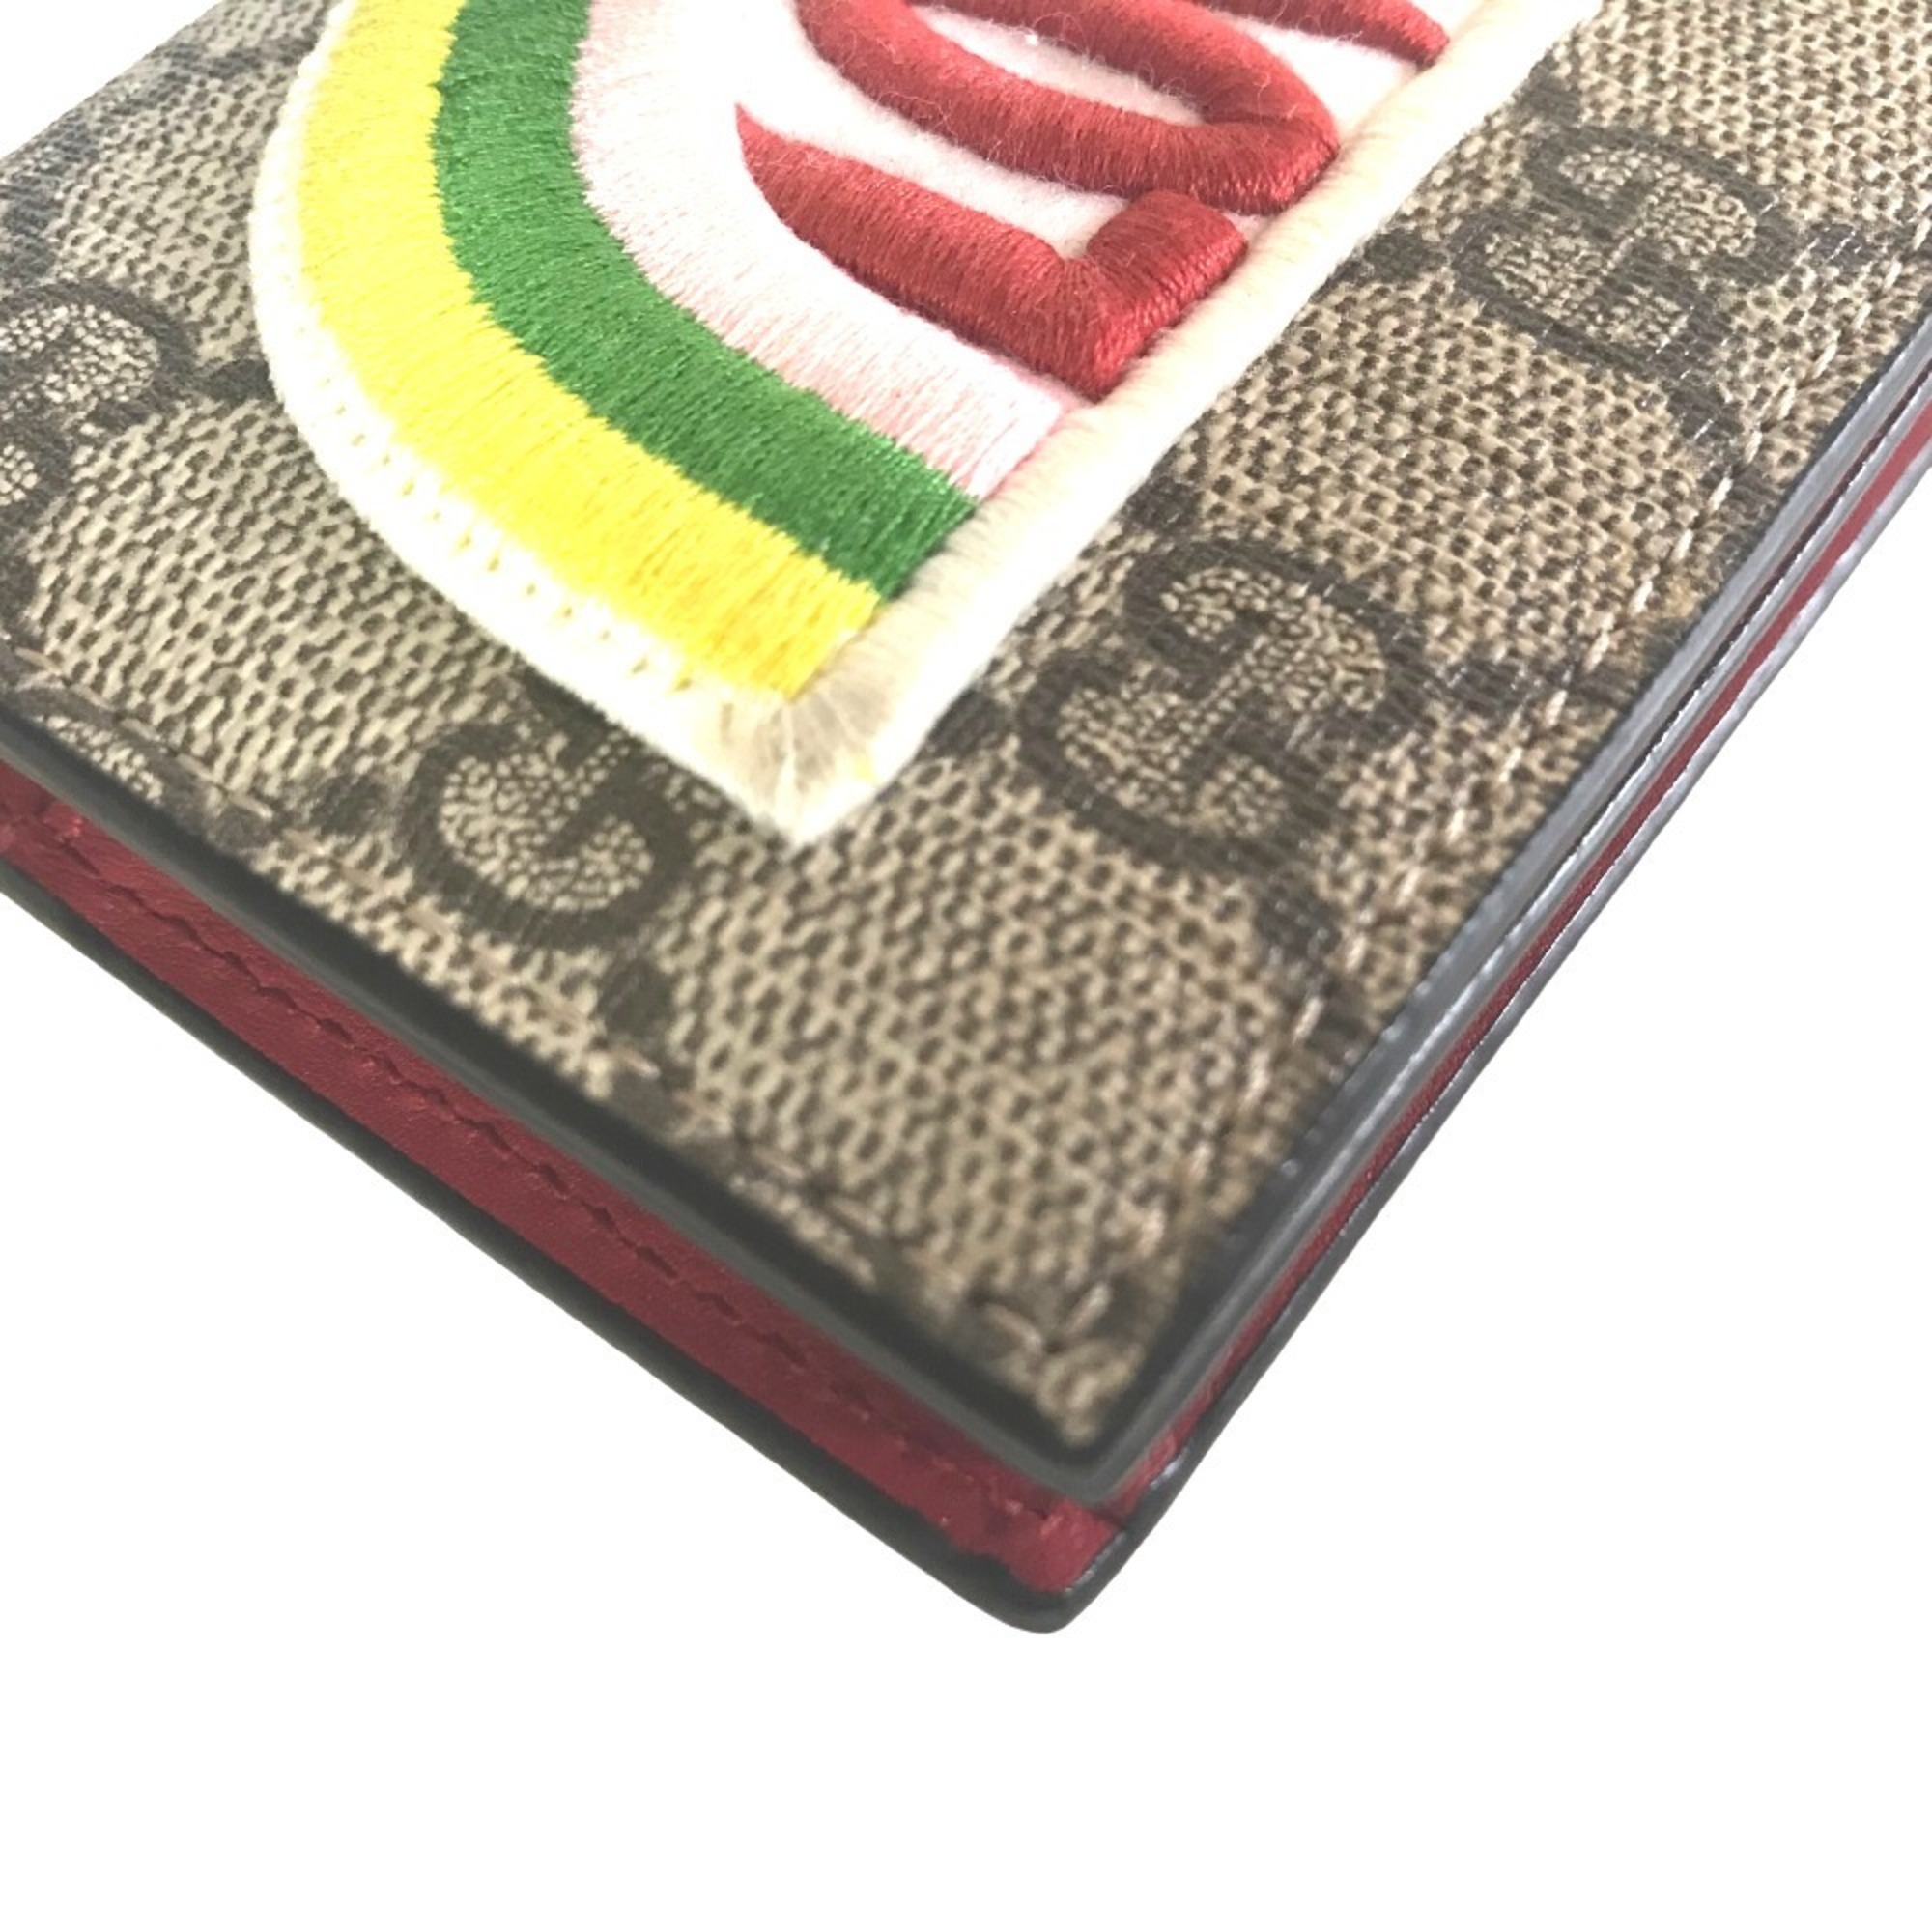 GUCCI Compact Wallet Bi-fold for Women GG Supreme Canvas Beige Multi-color 476412 498075